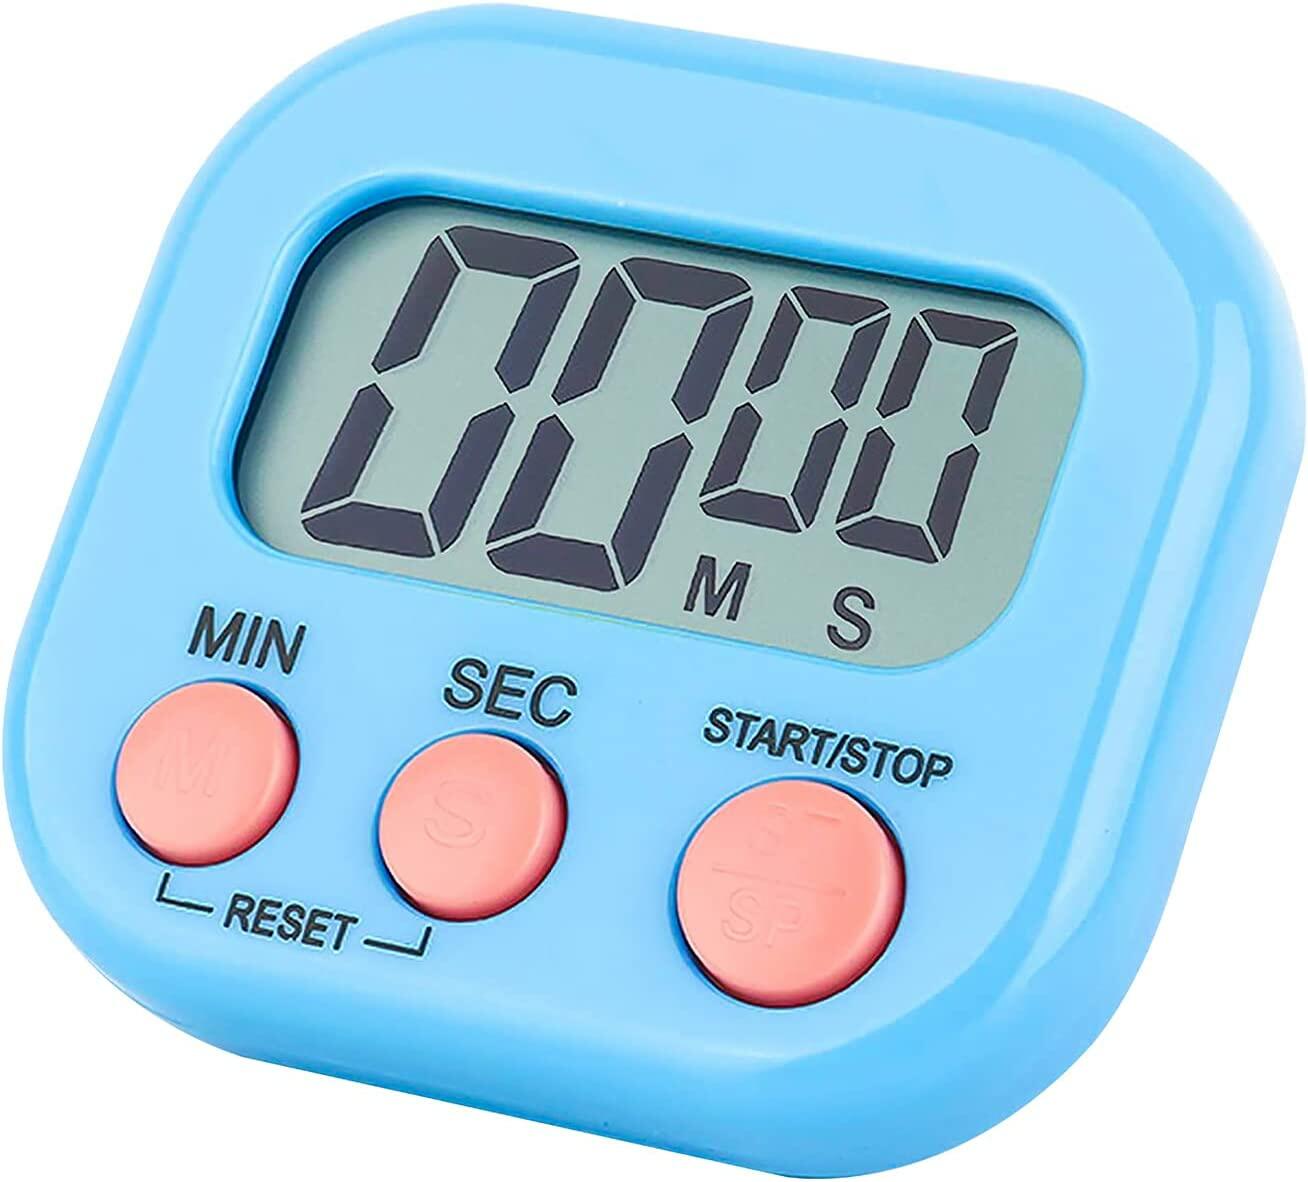 Taylor Mini Magnetic Digital Timer